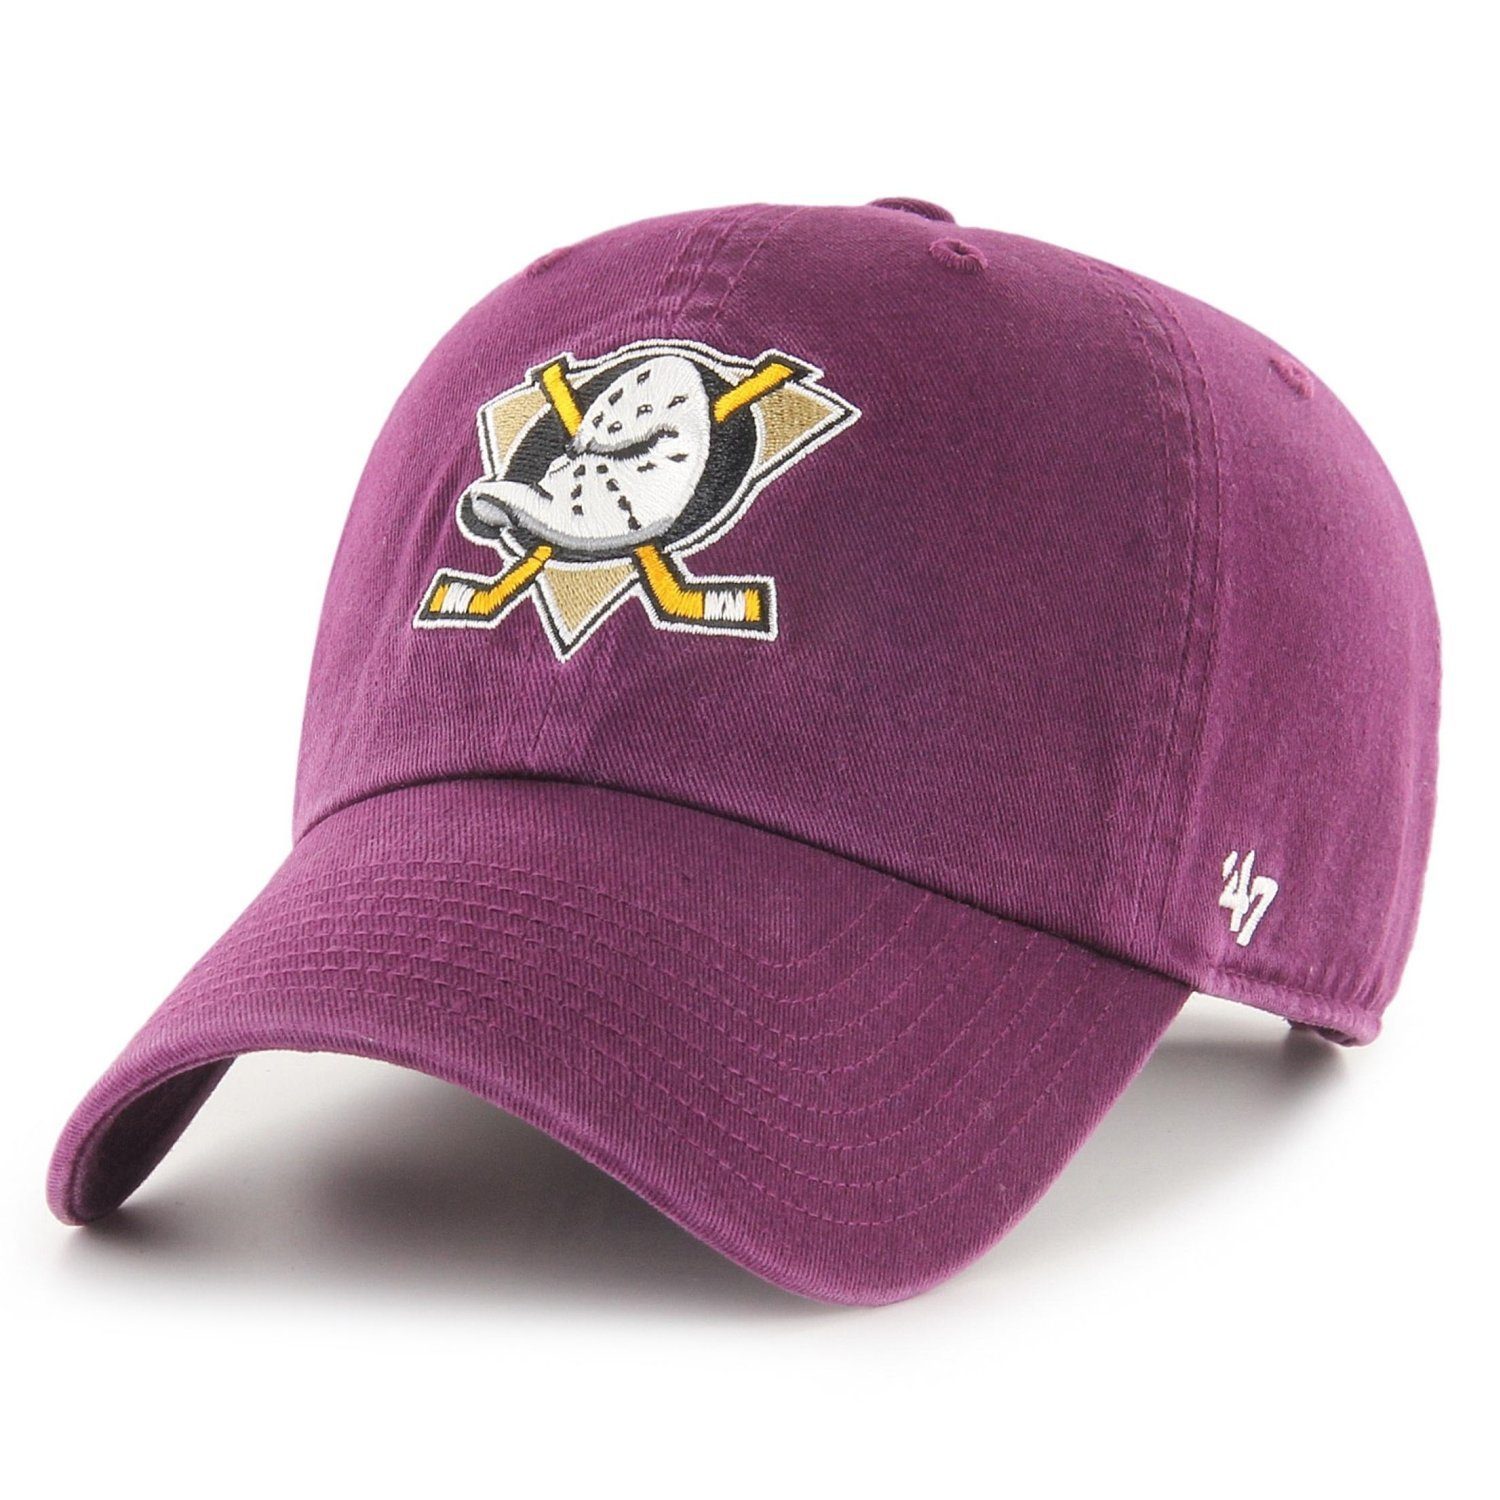 UP Ducks CLEAN Anaheim '47 Brand Baseball plum Cap